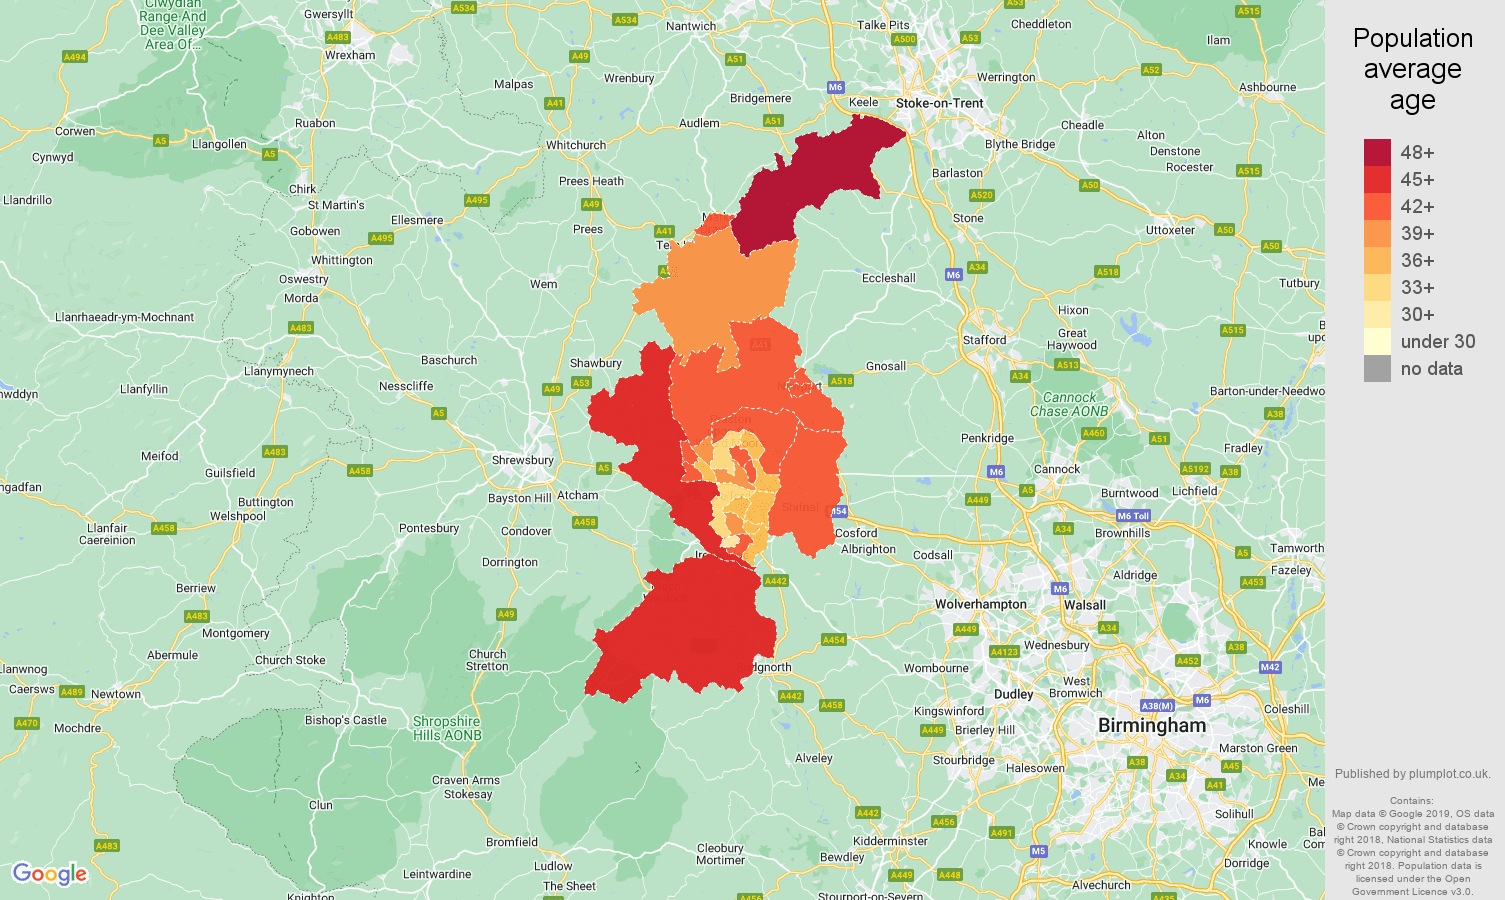 Telford population average age map